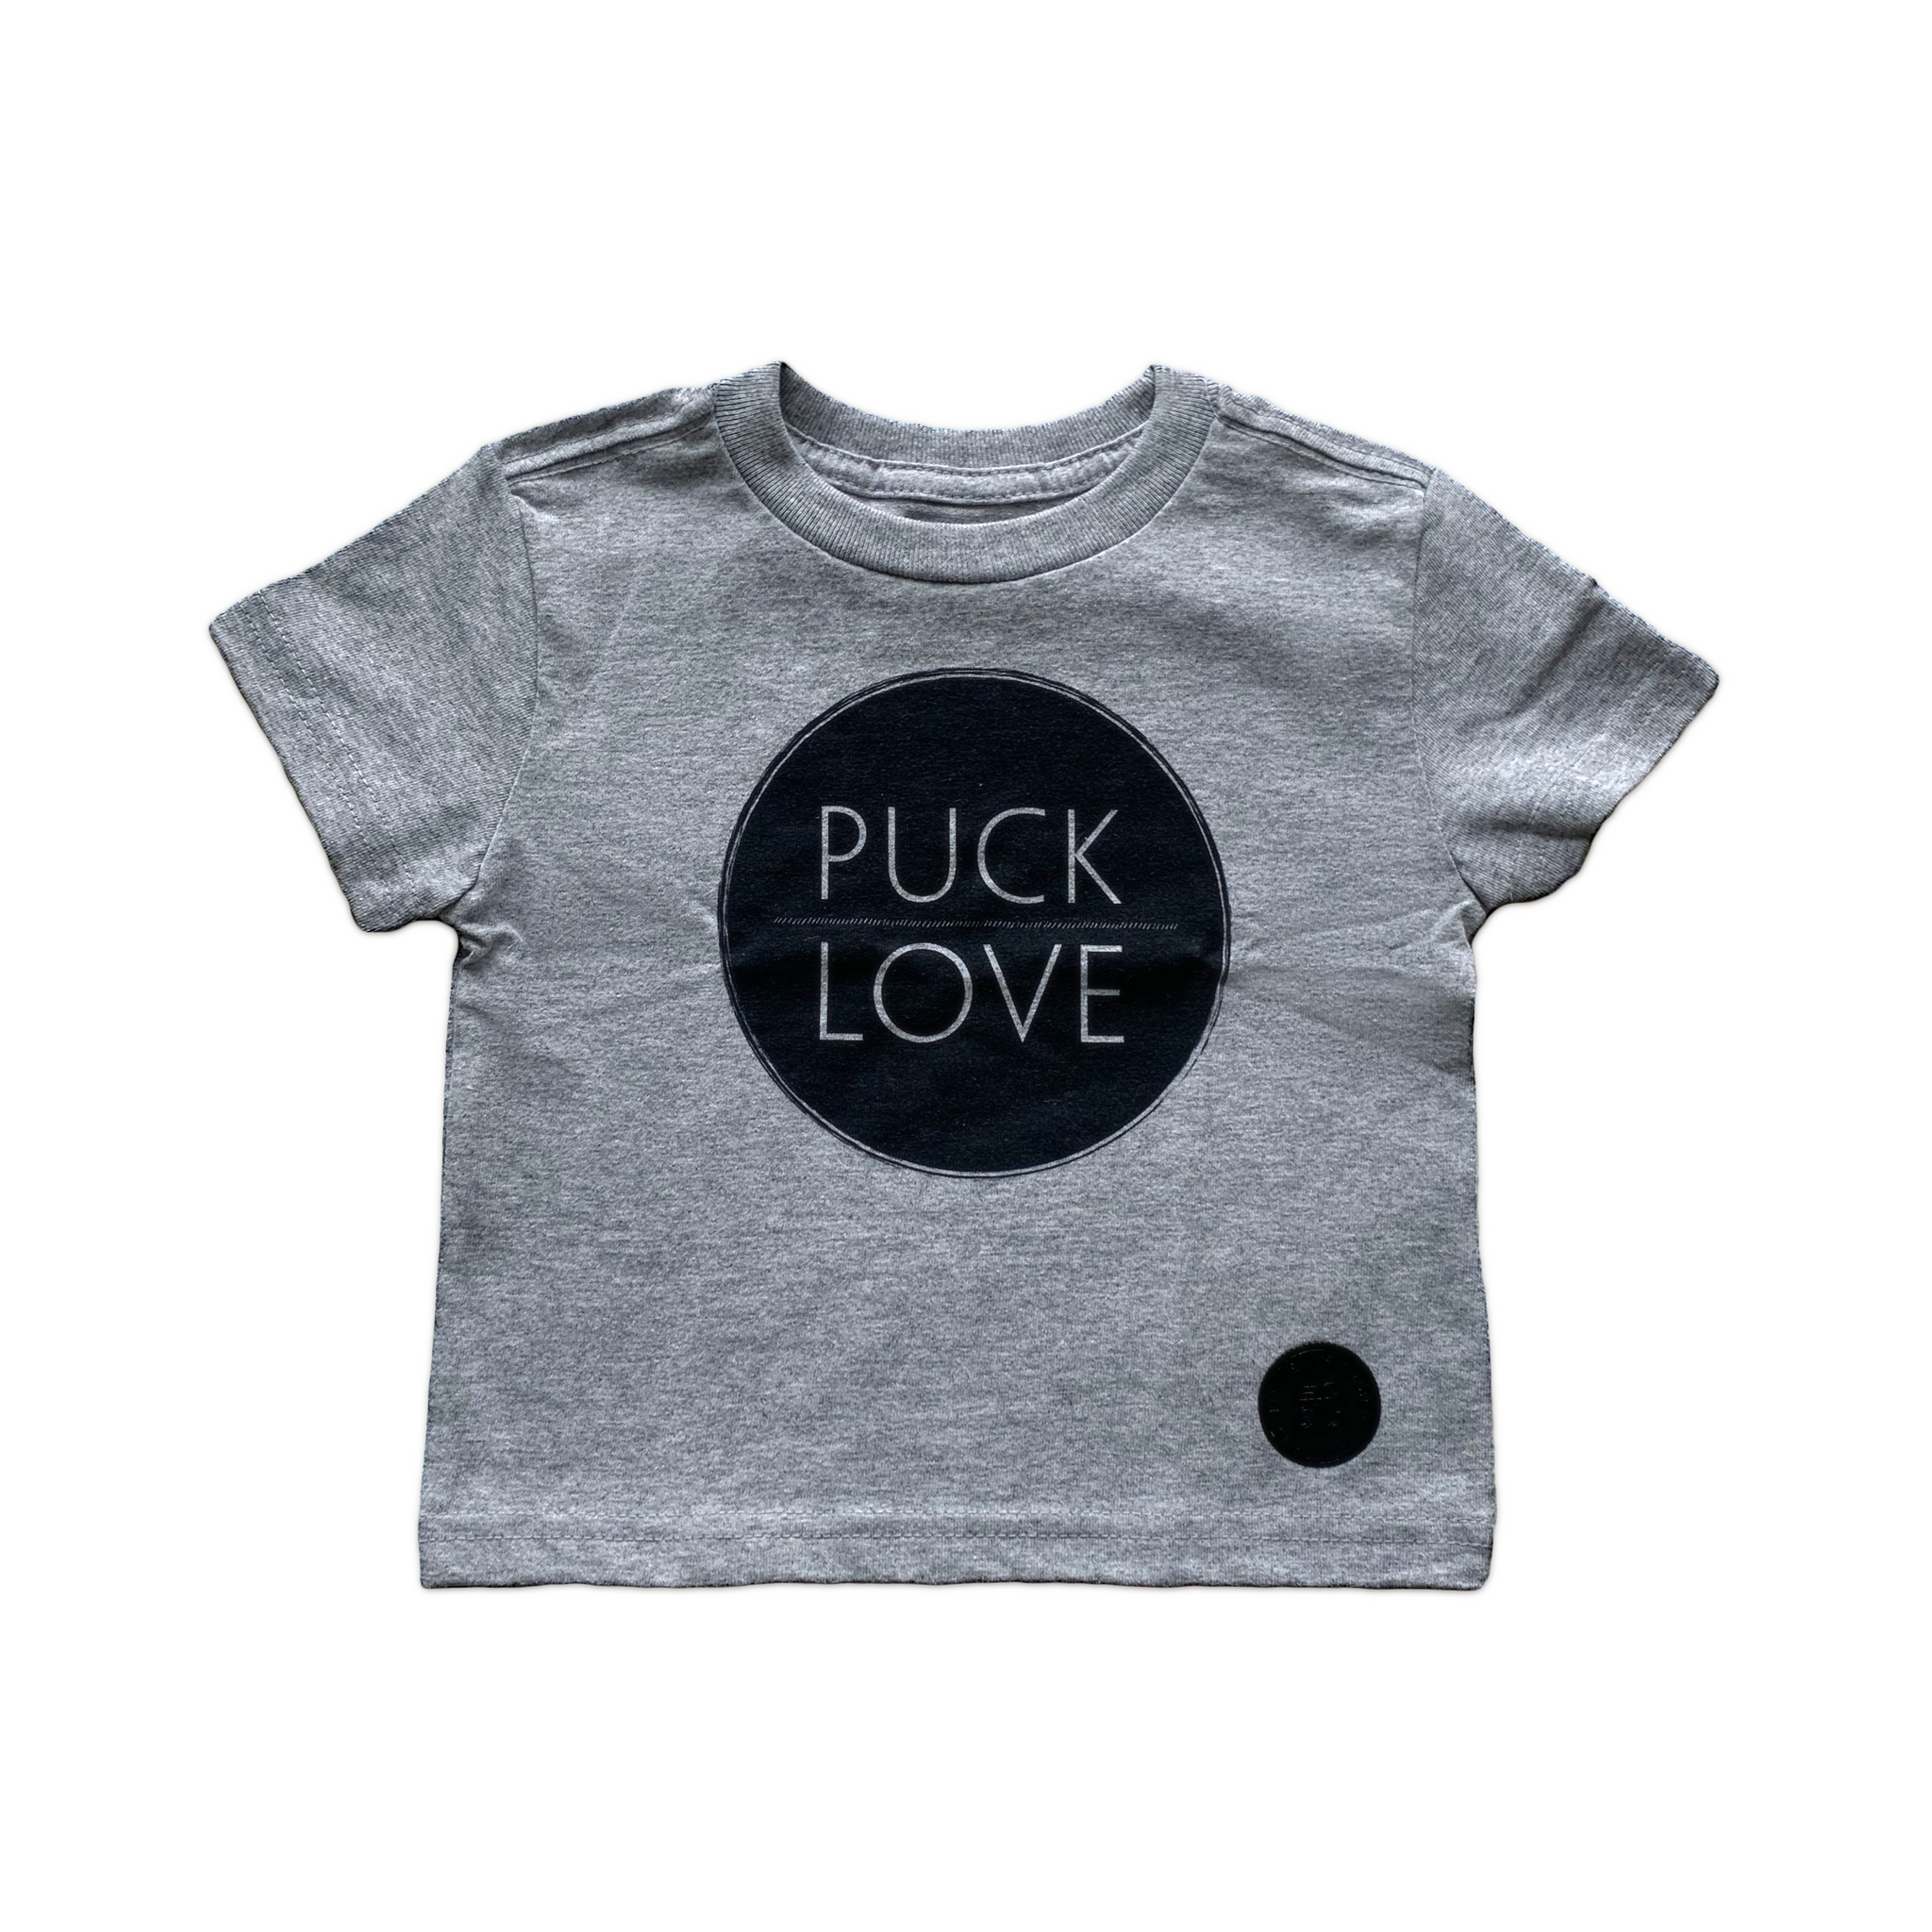 Puck Love Kids Tee